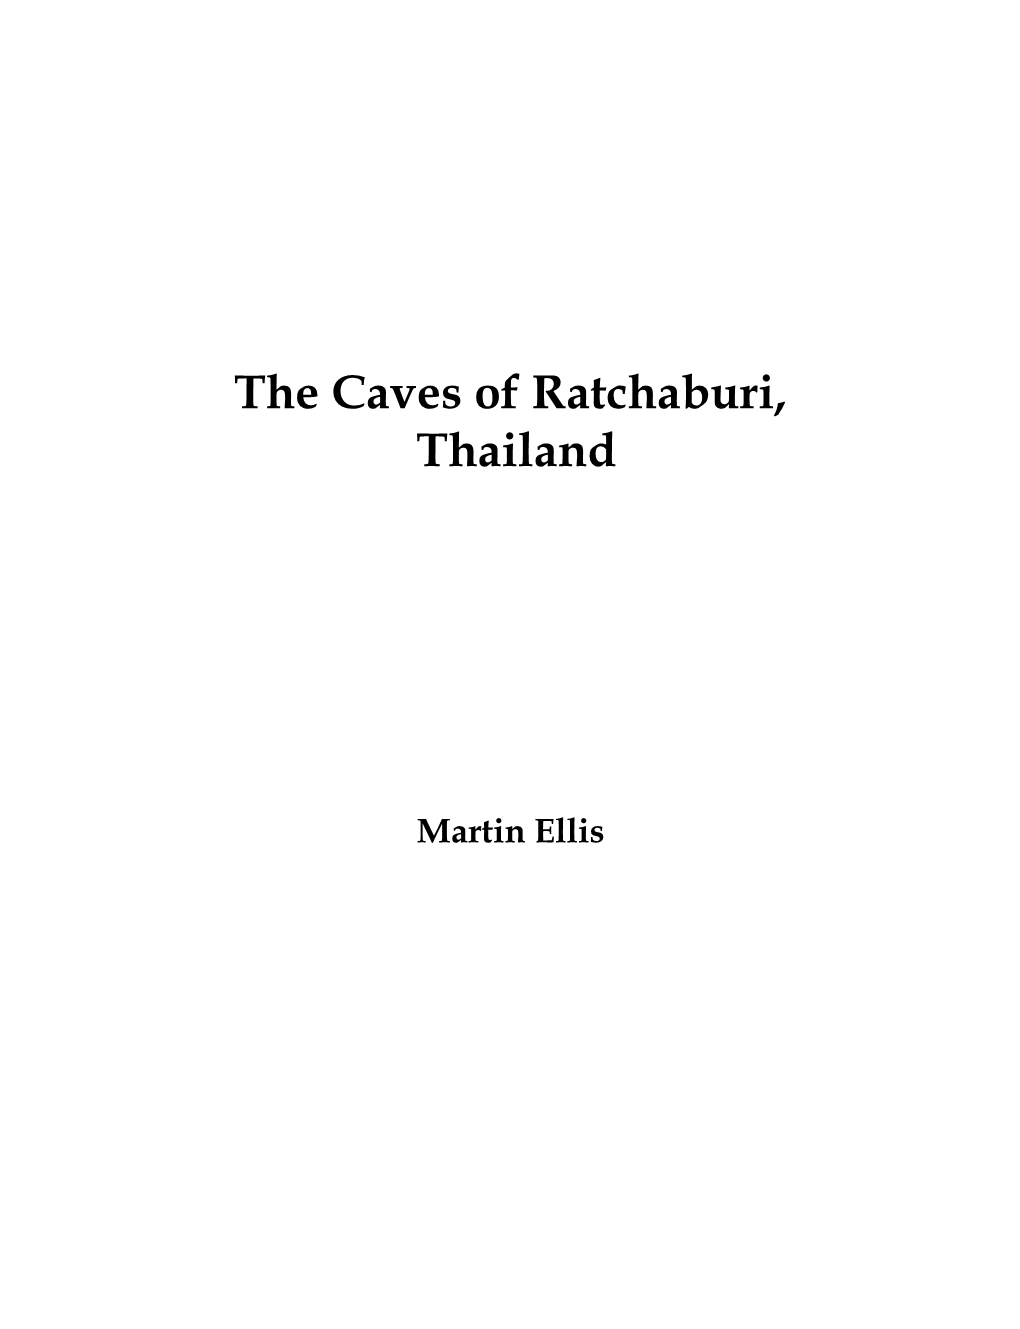 The Caves of Ratchaburi, Thailand